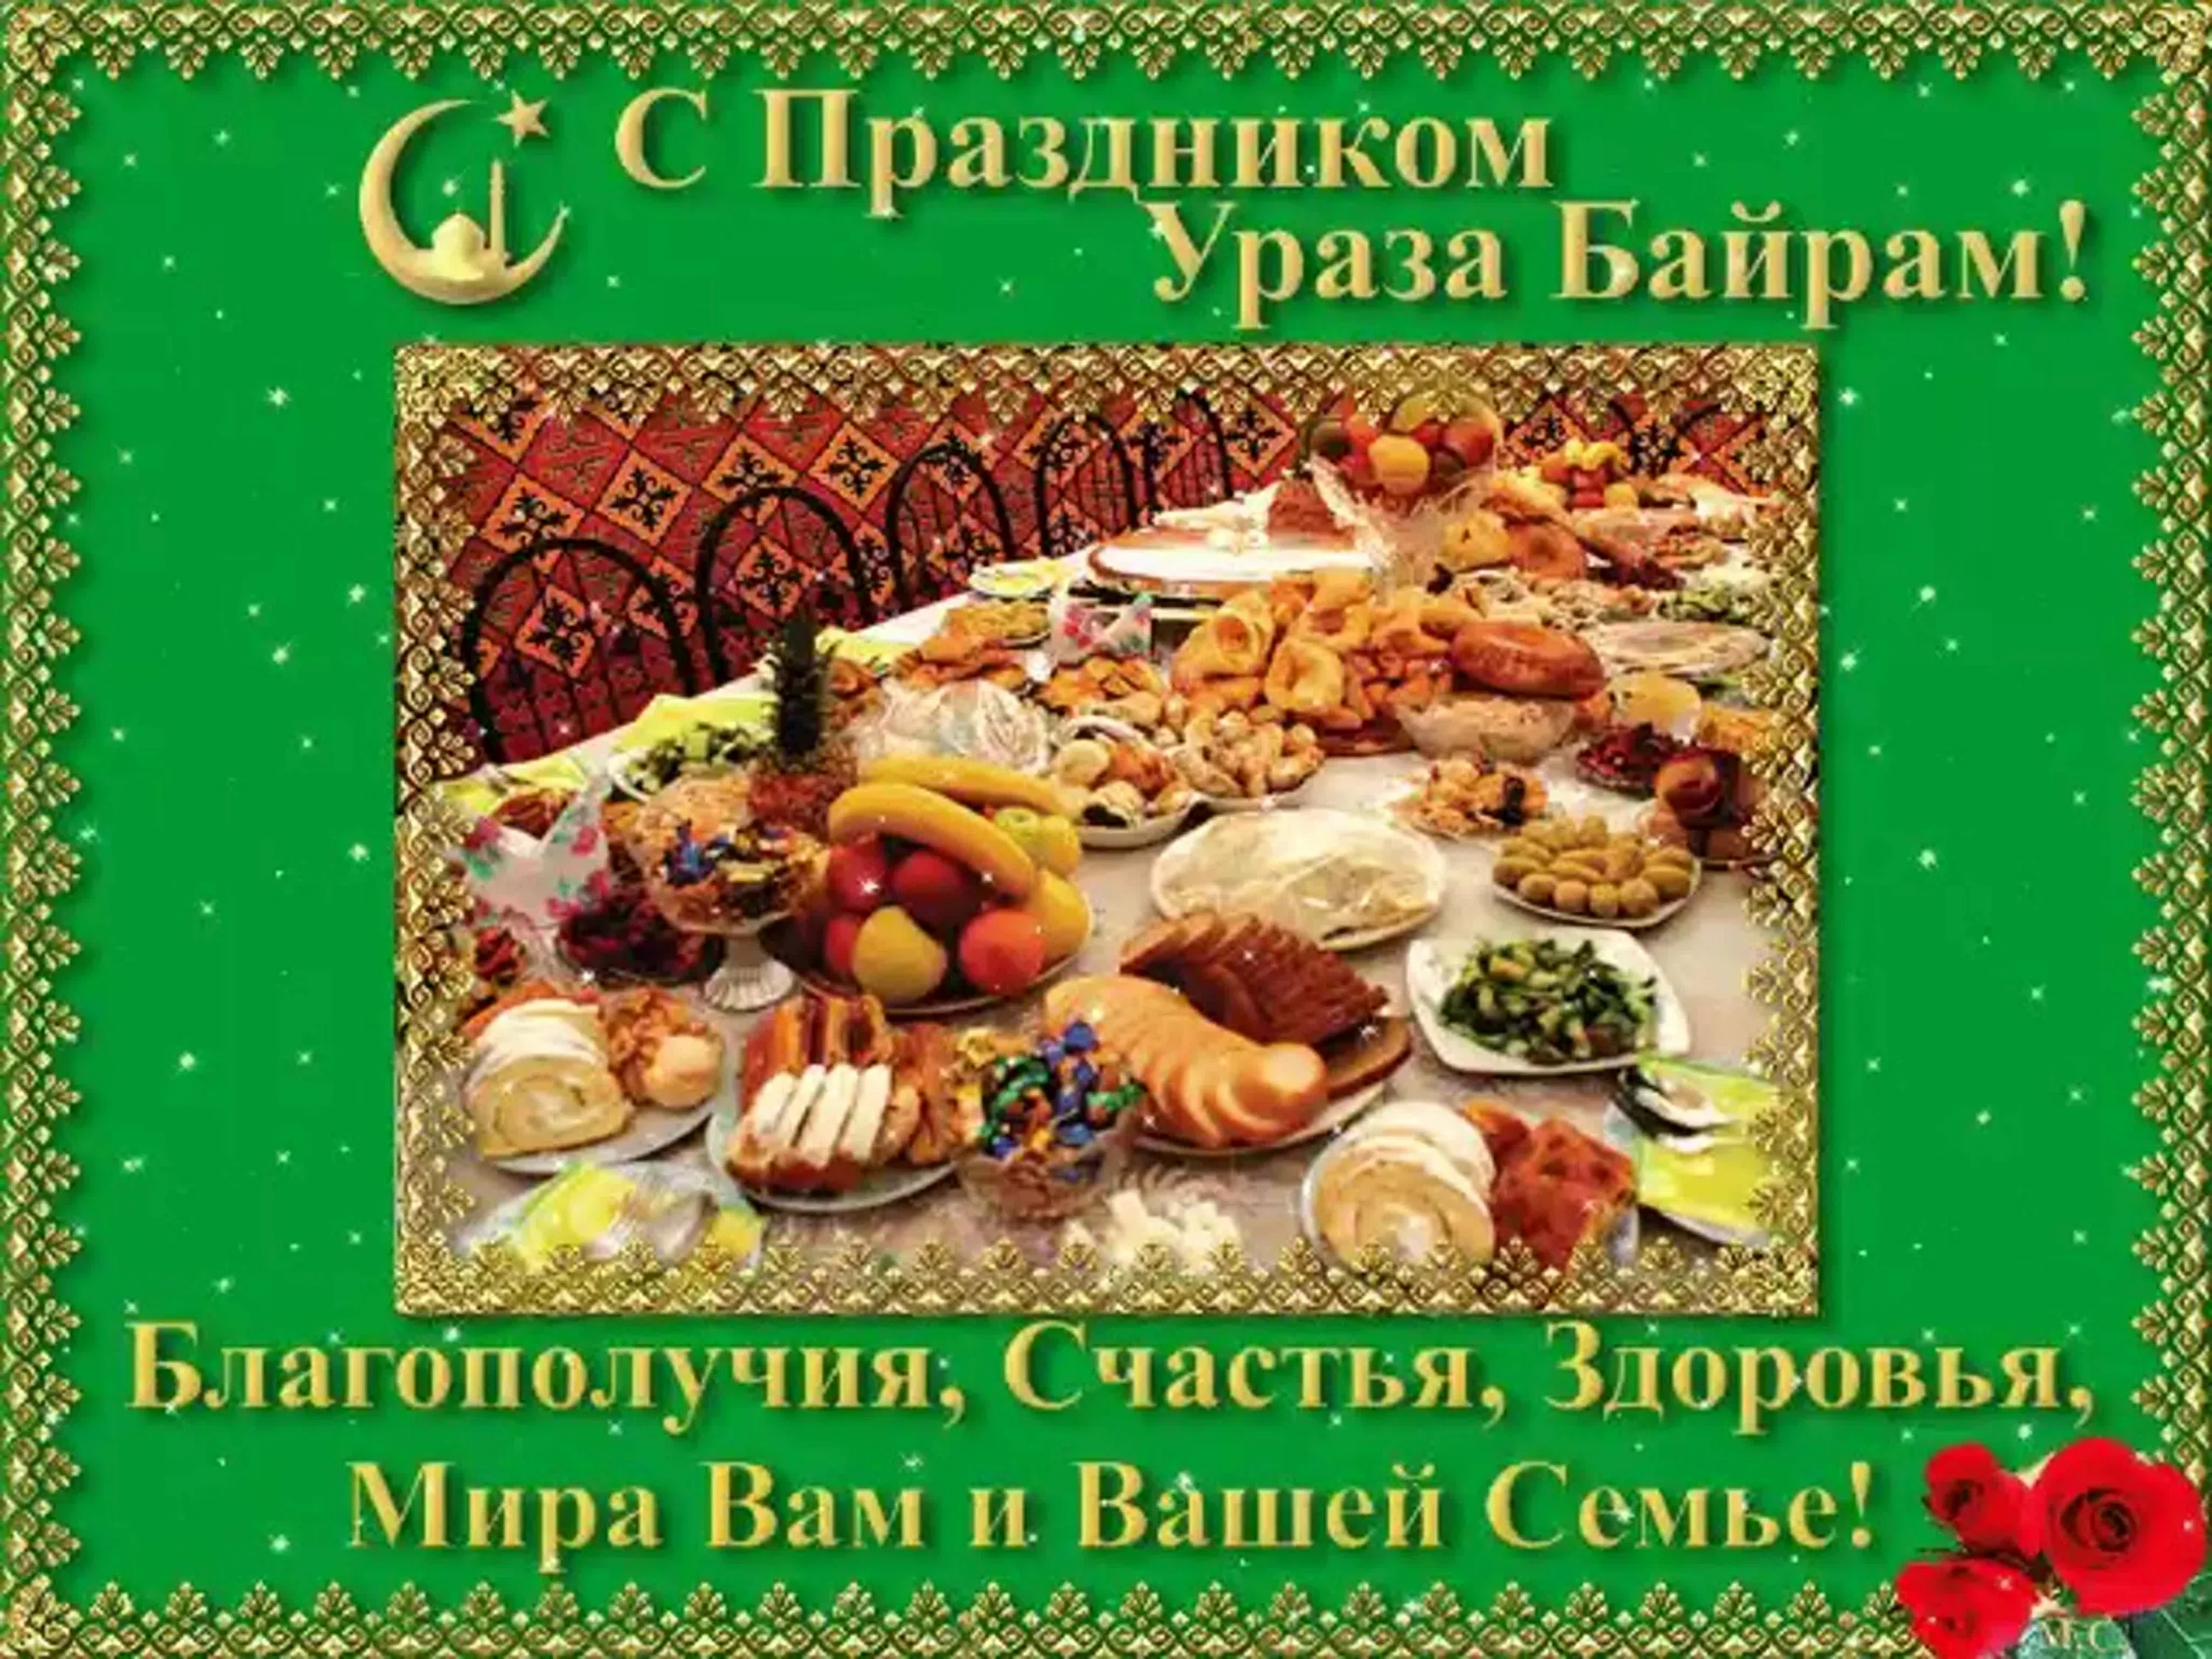 Фото Congratulations from Uraza Bairam in Tatar #10